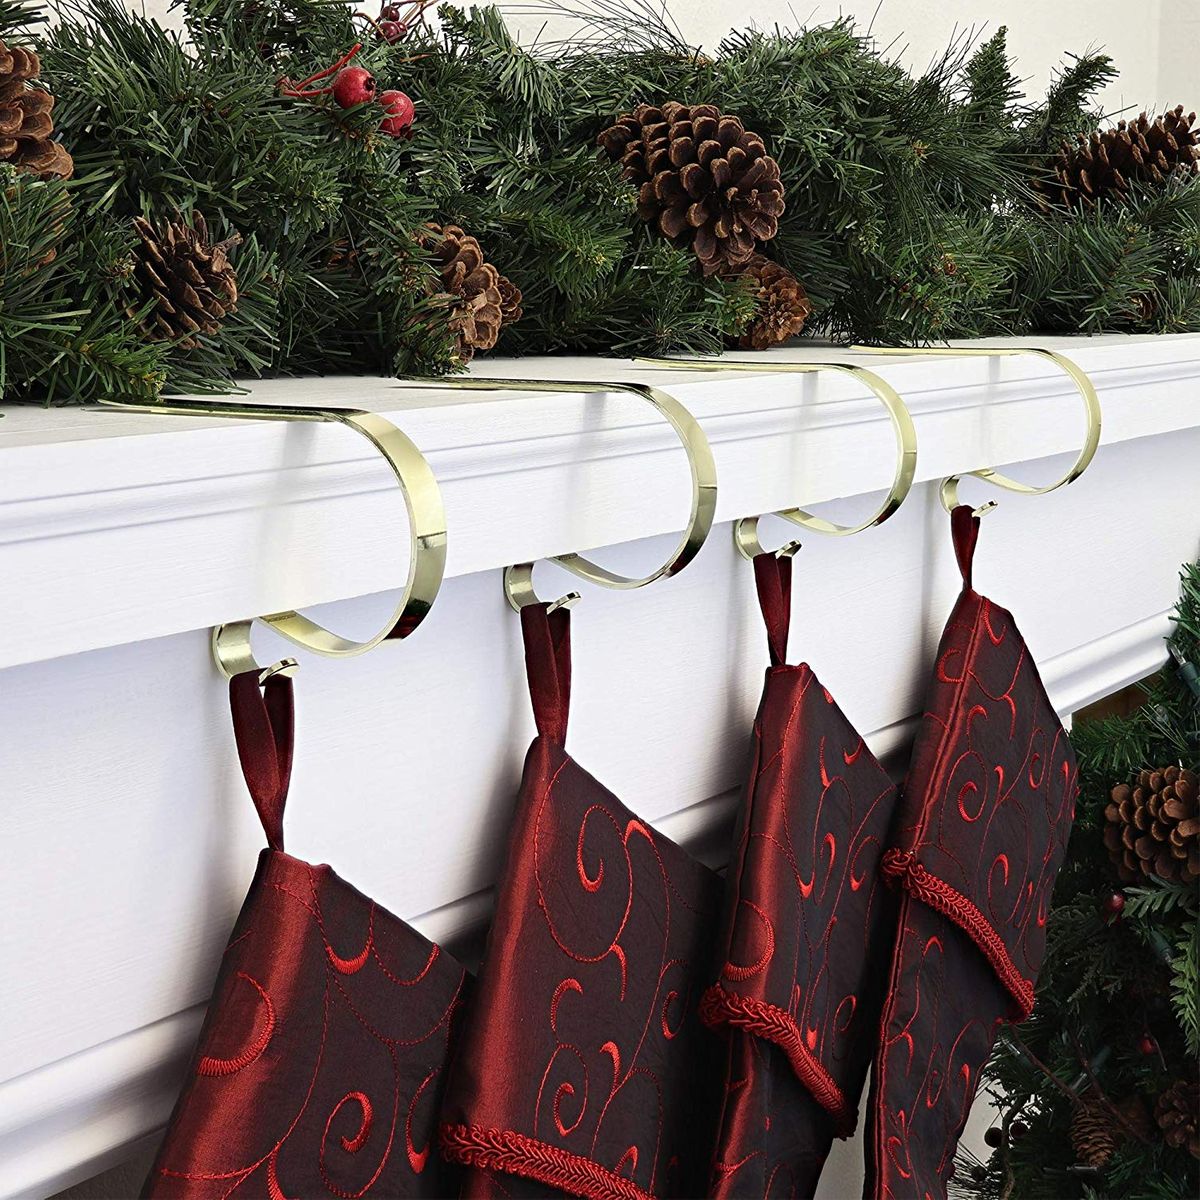 Holiday Joy 4 Christmas Safety Grip Stocking Holders Hang Stockings Without Damage!